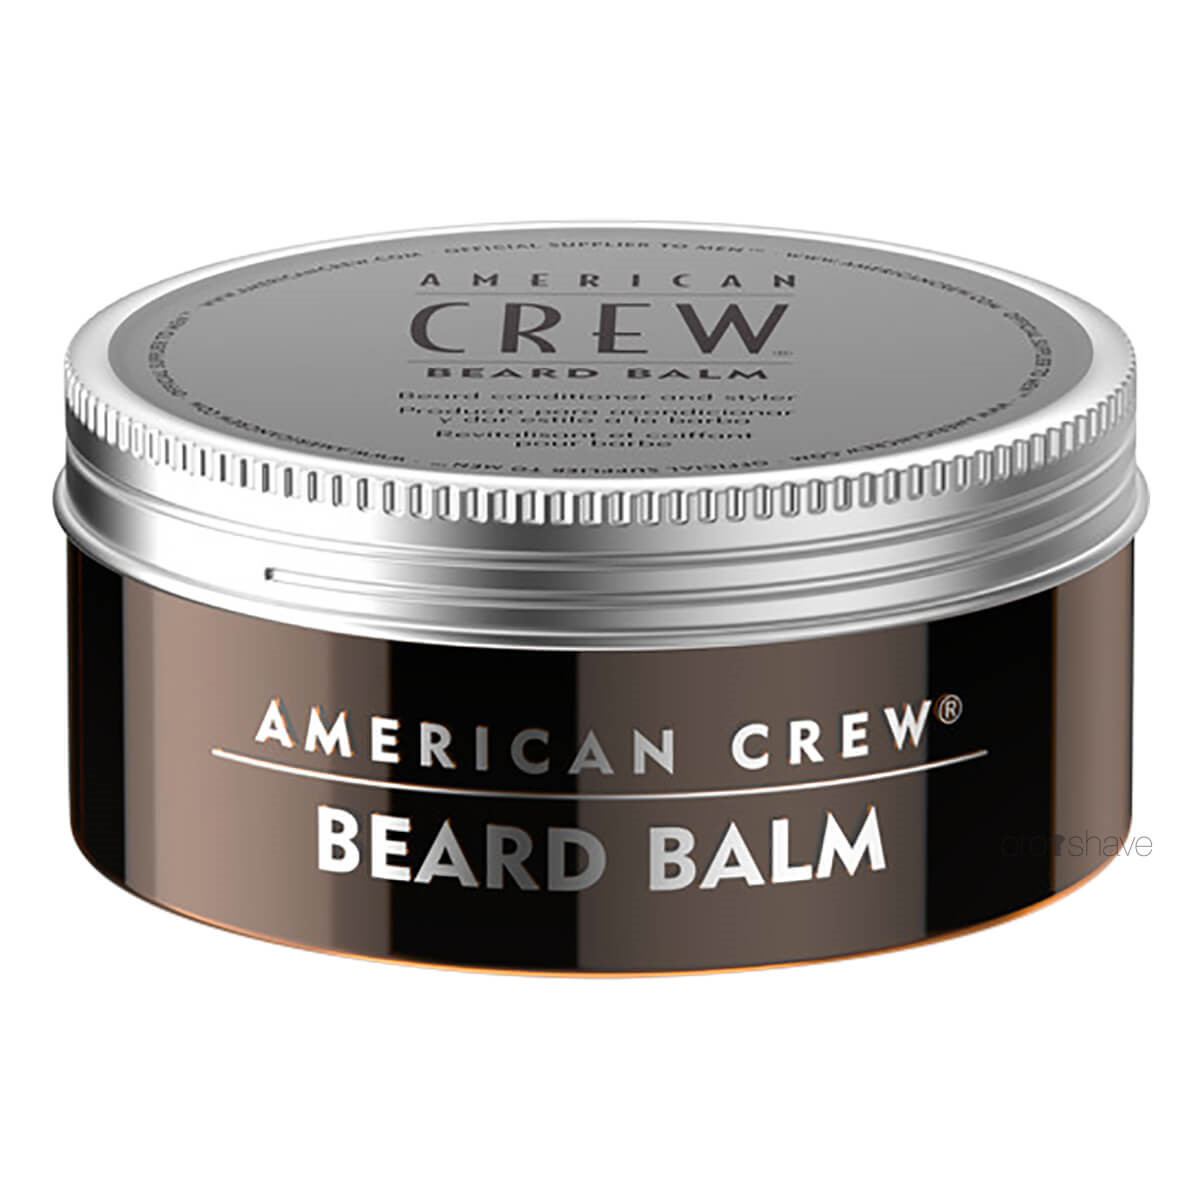 Billede af American Crew Beard Balm, 50 ml.